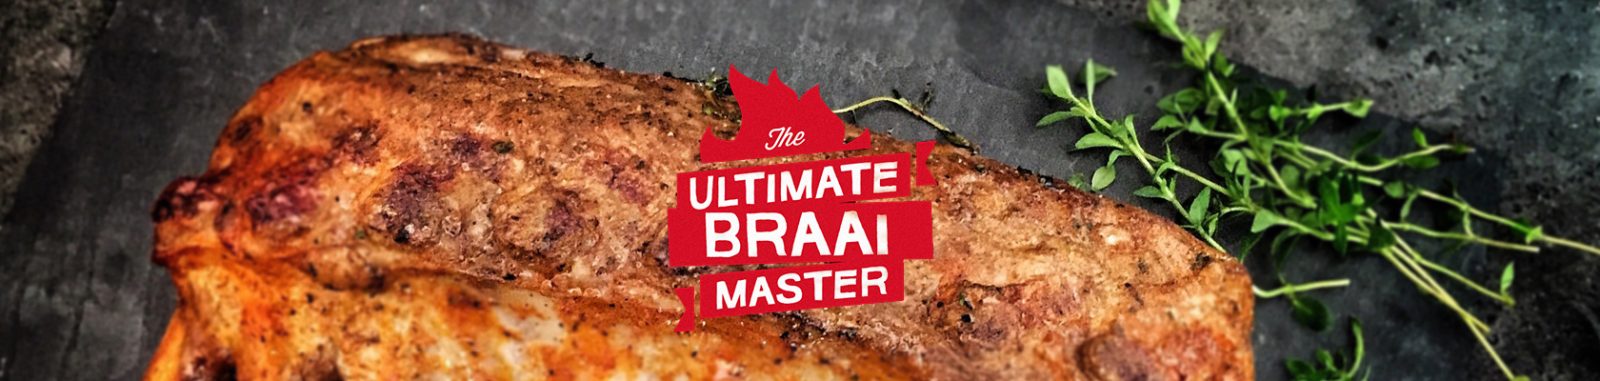 Ultimate Braai Master Season 5 main logo